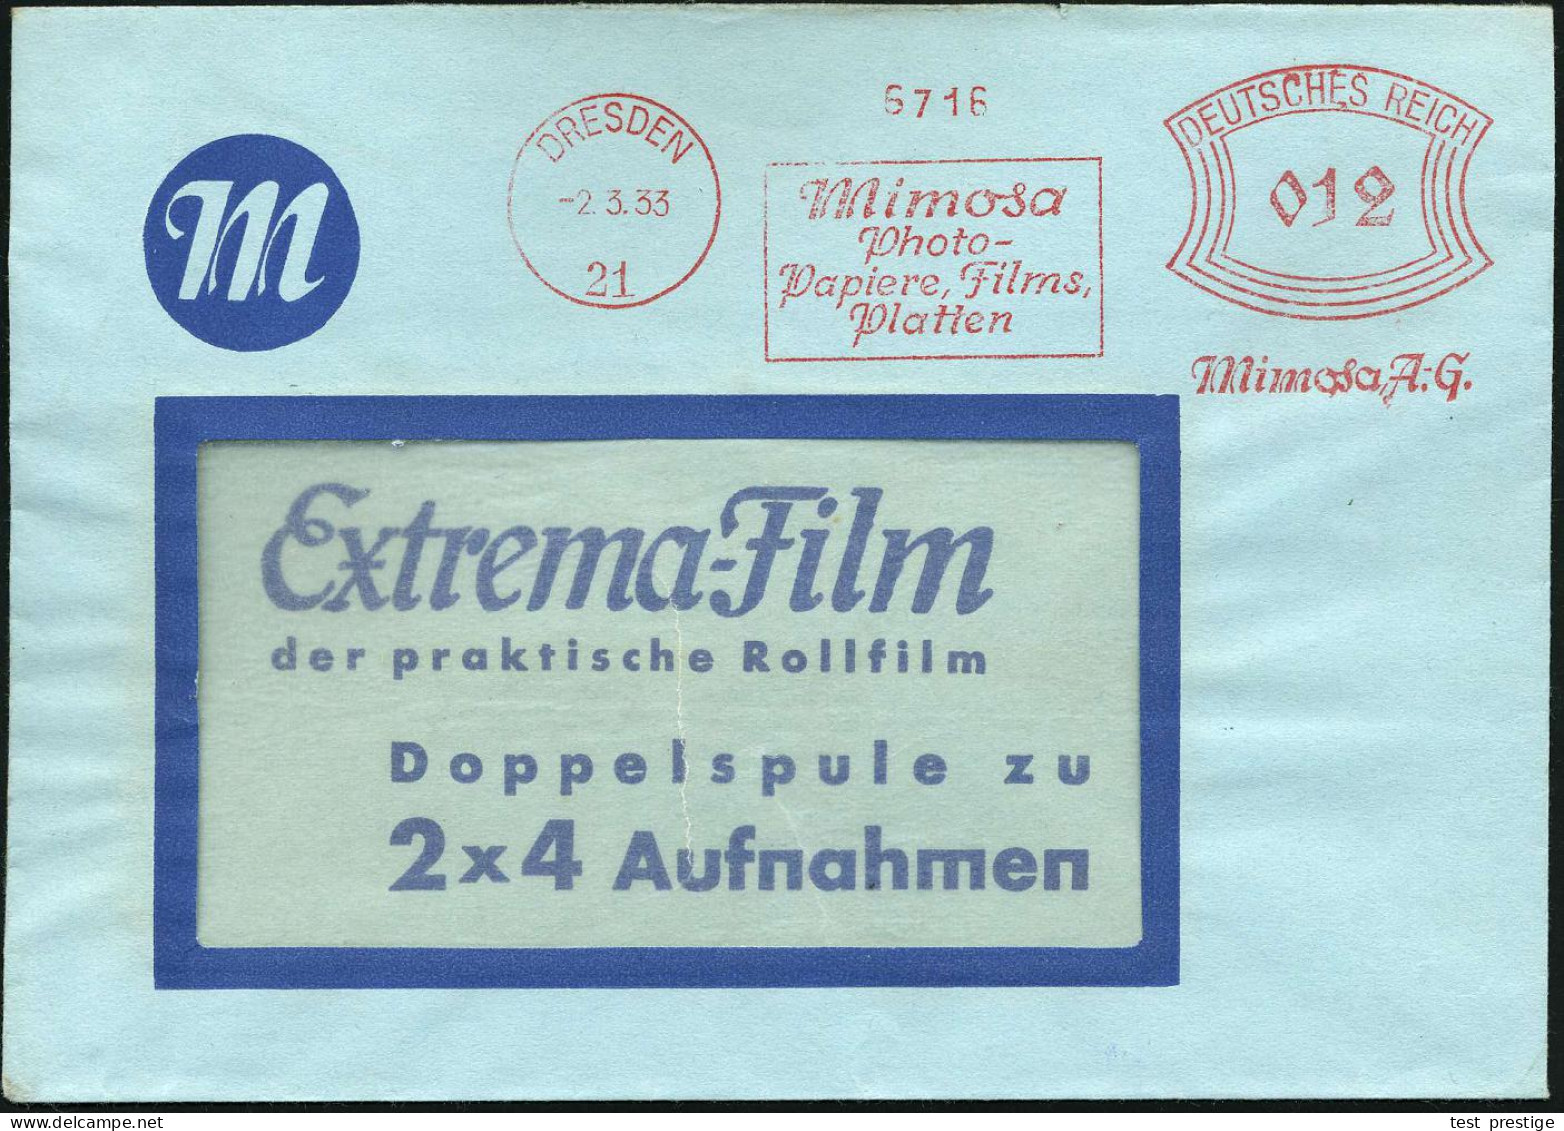 DRESDEN A21/ Mimosa/ Photo-/ Papiere,Films/ Platten.. 1933 (2.3.) AFS Francotyp Auf Dekorativem Reklame-Bf: Extrema-Film - Photography